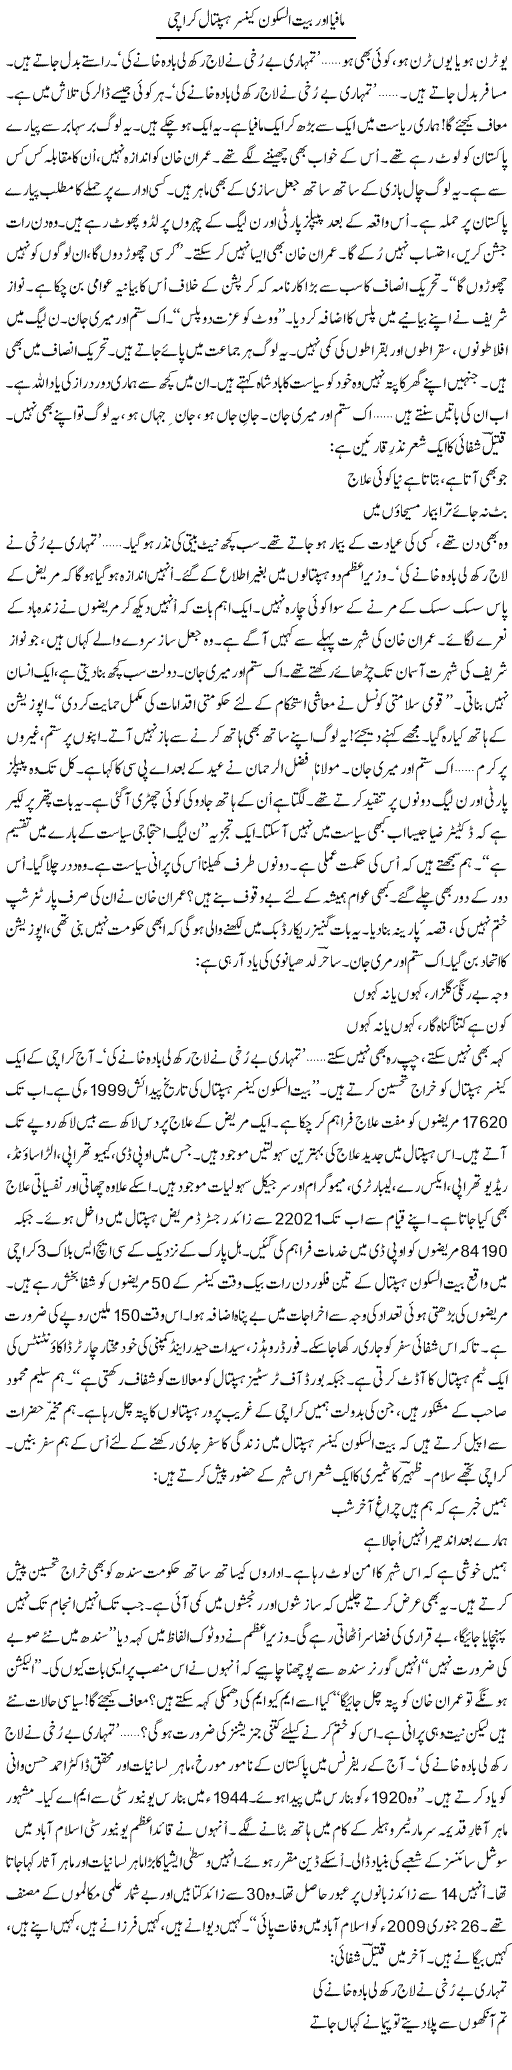 Mafia Aur Bait Ul Sukoon Cancer Hospital Karachi | Ejaz Hafeez Khan | Daily Urdu Columns